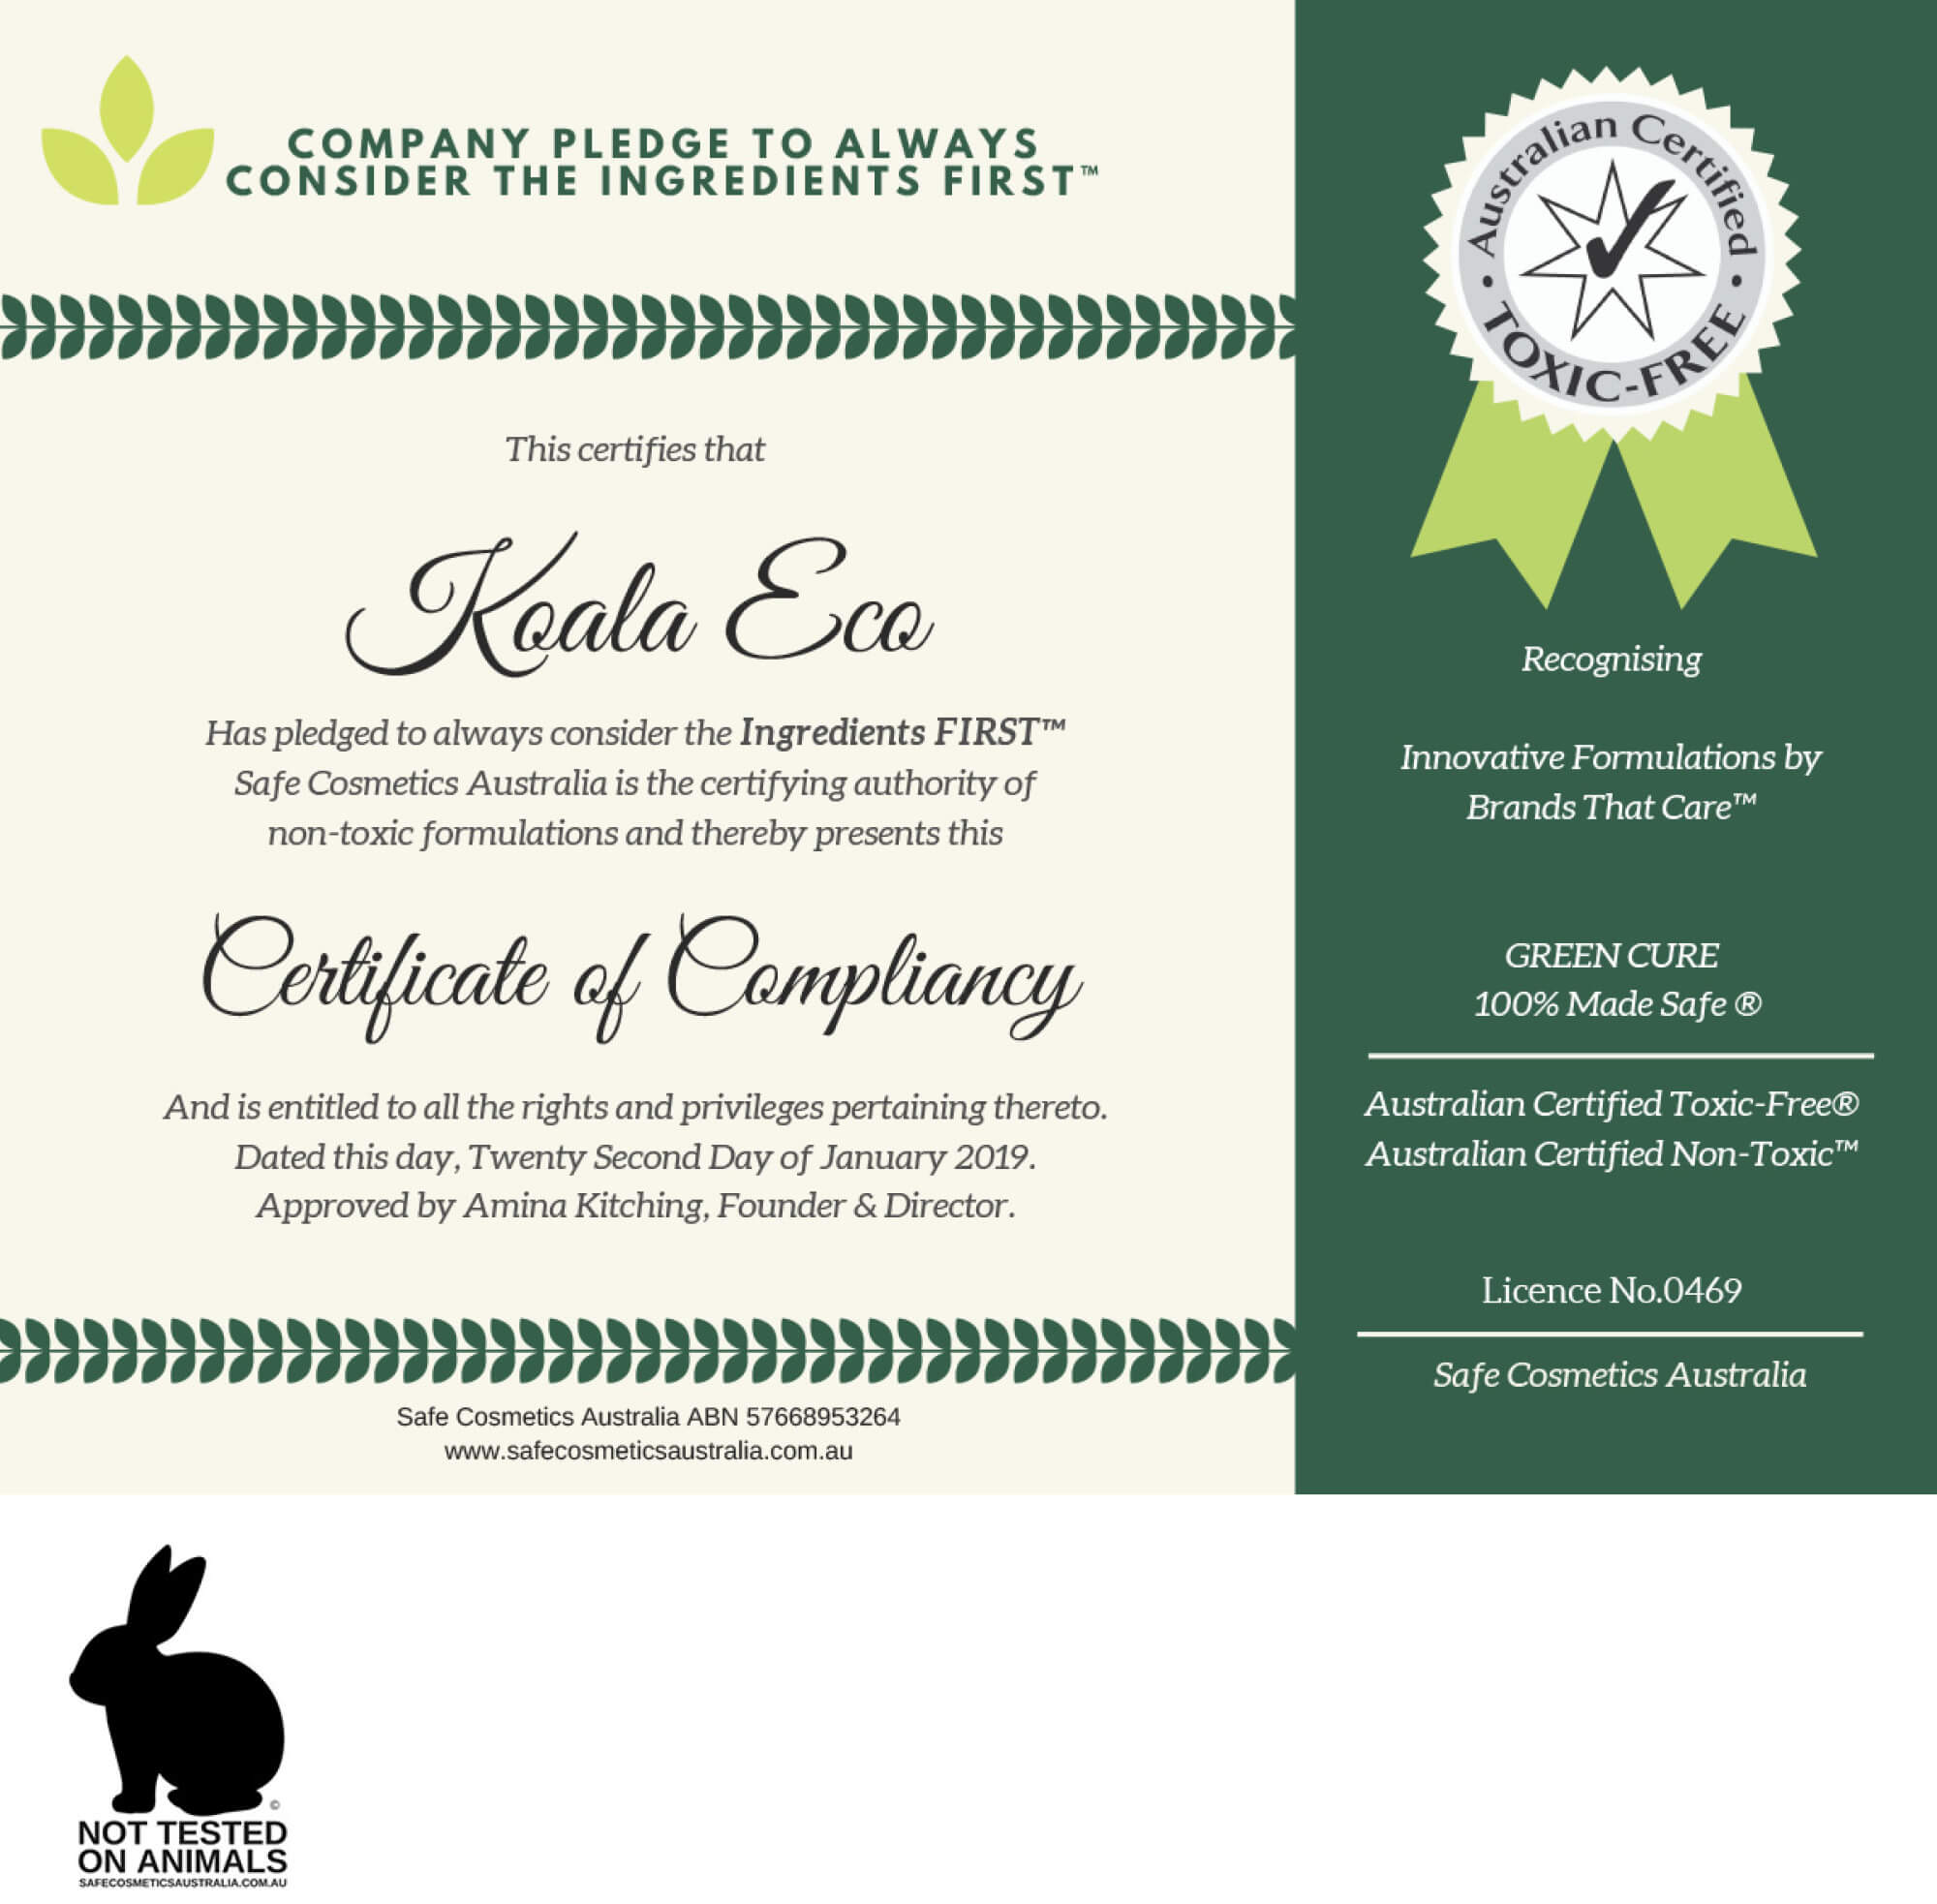 This certifies that Koala Eco